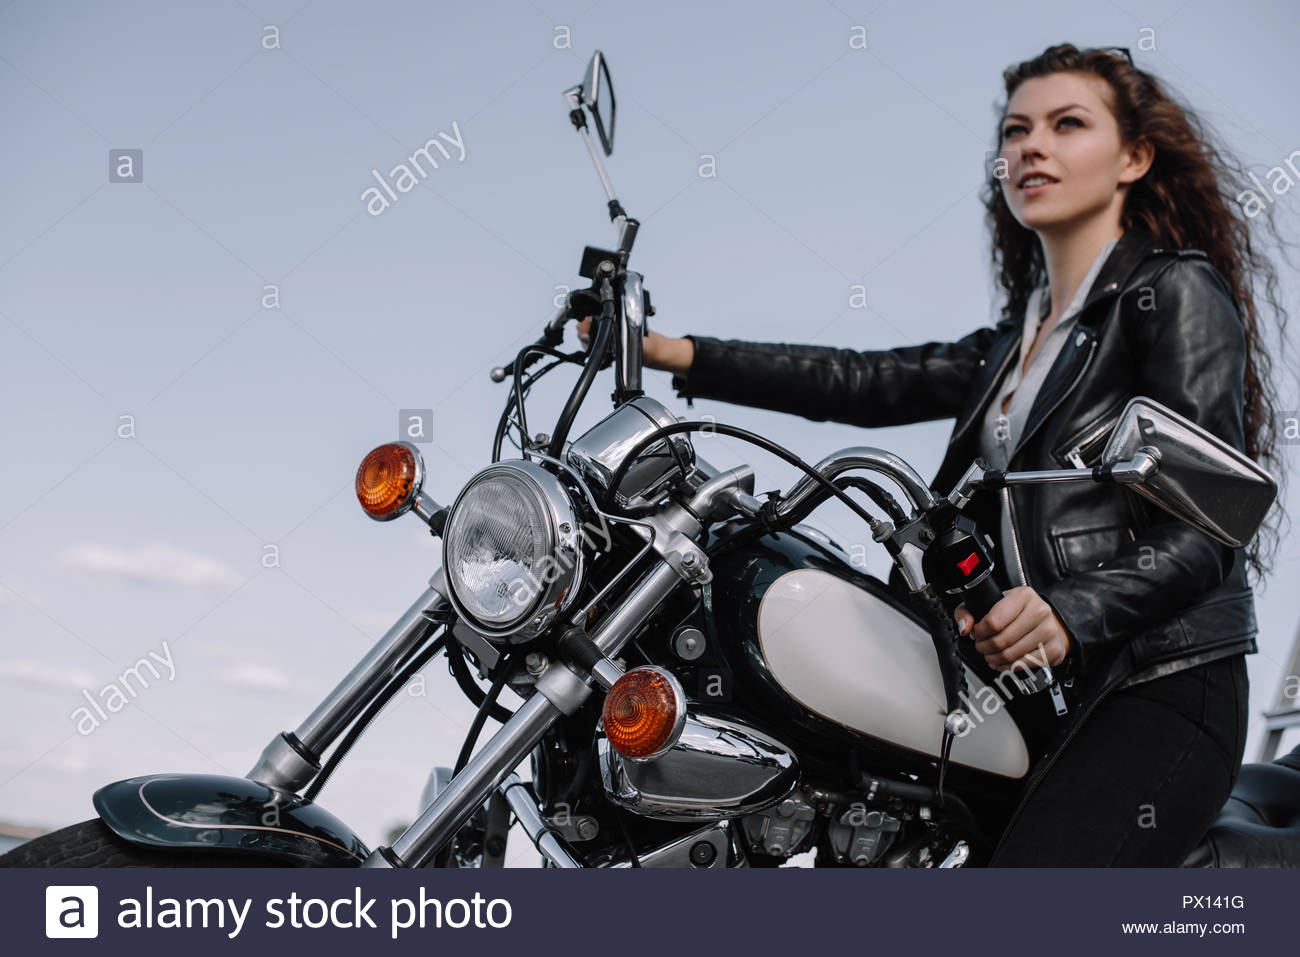 female_biker_3.jpg